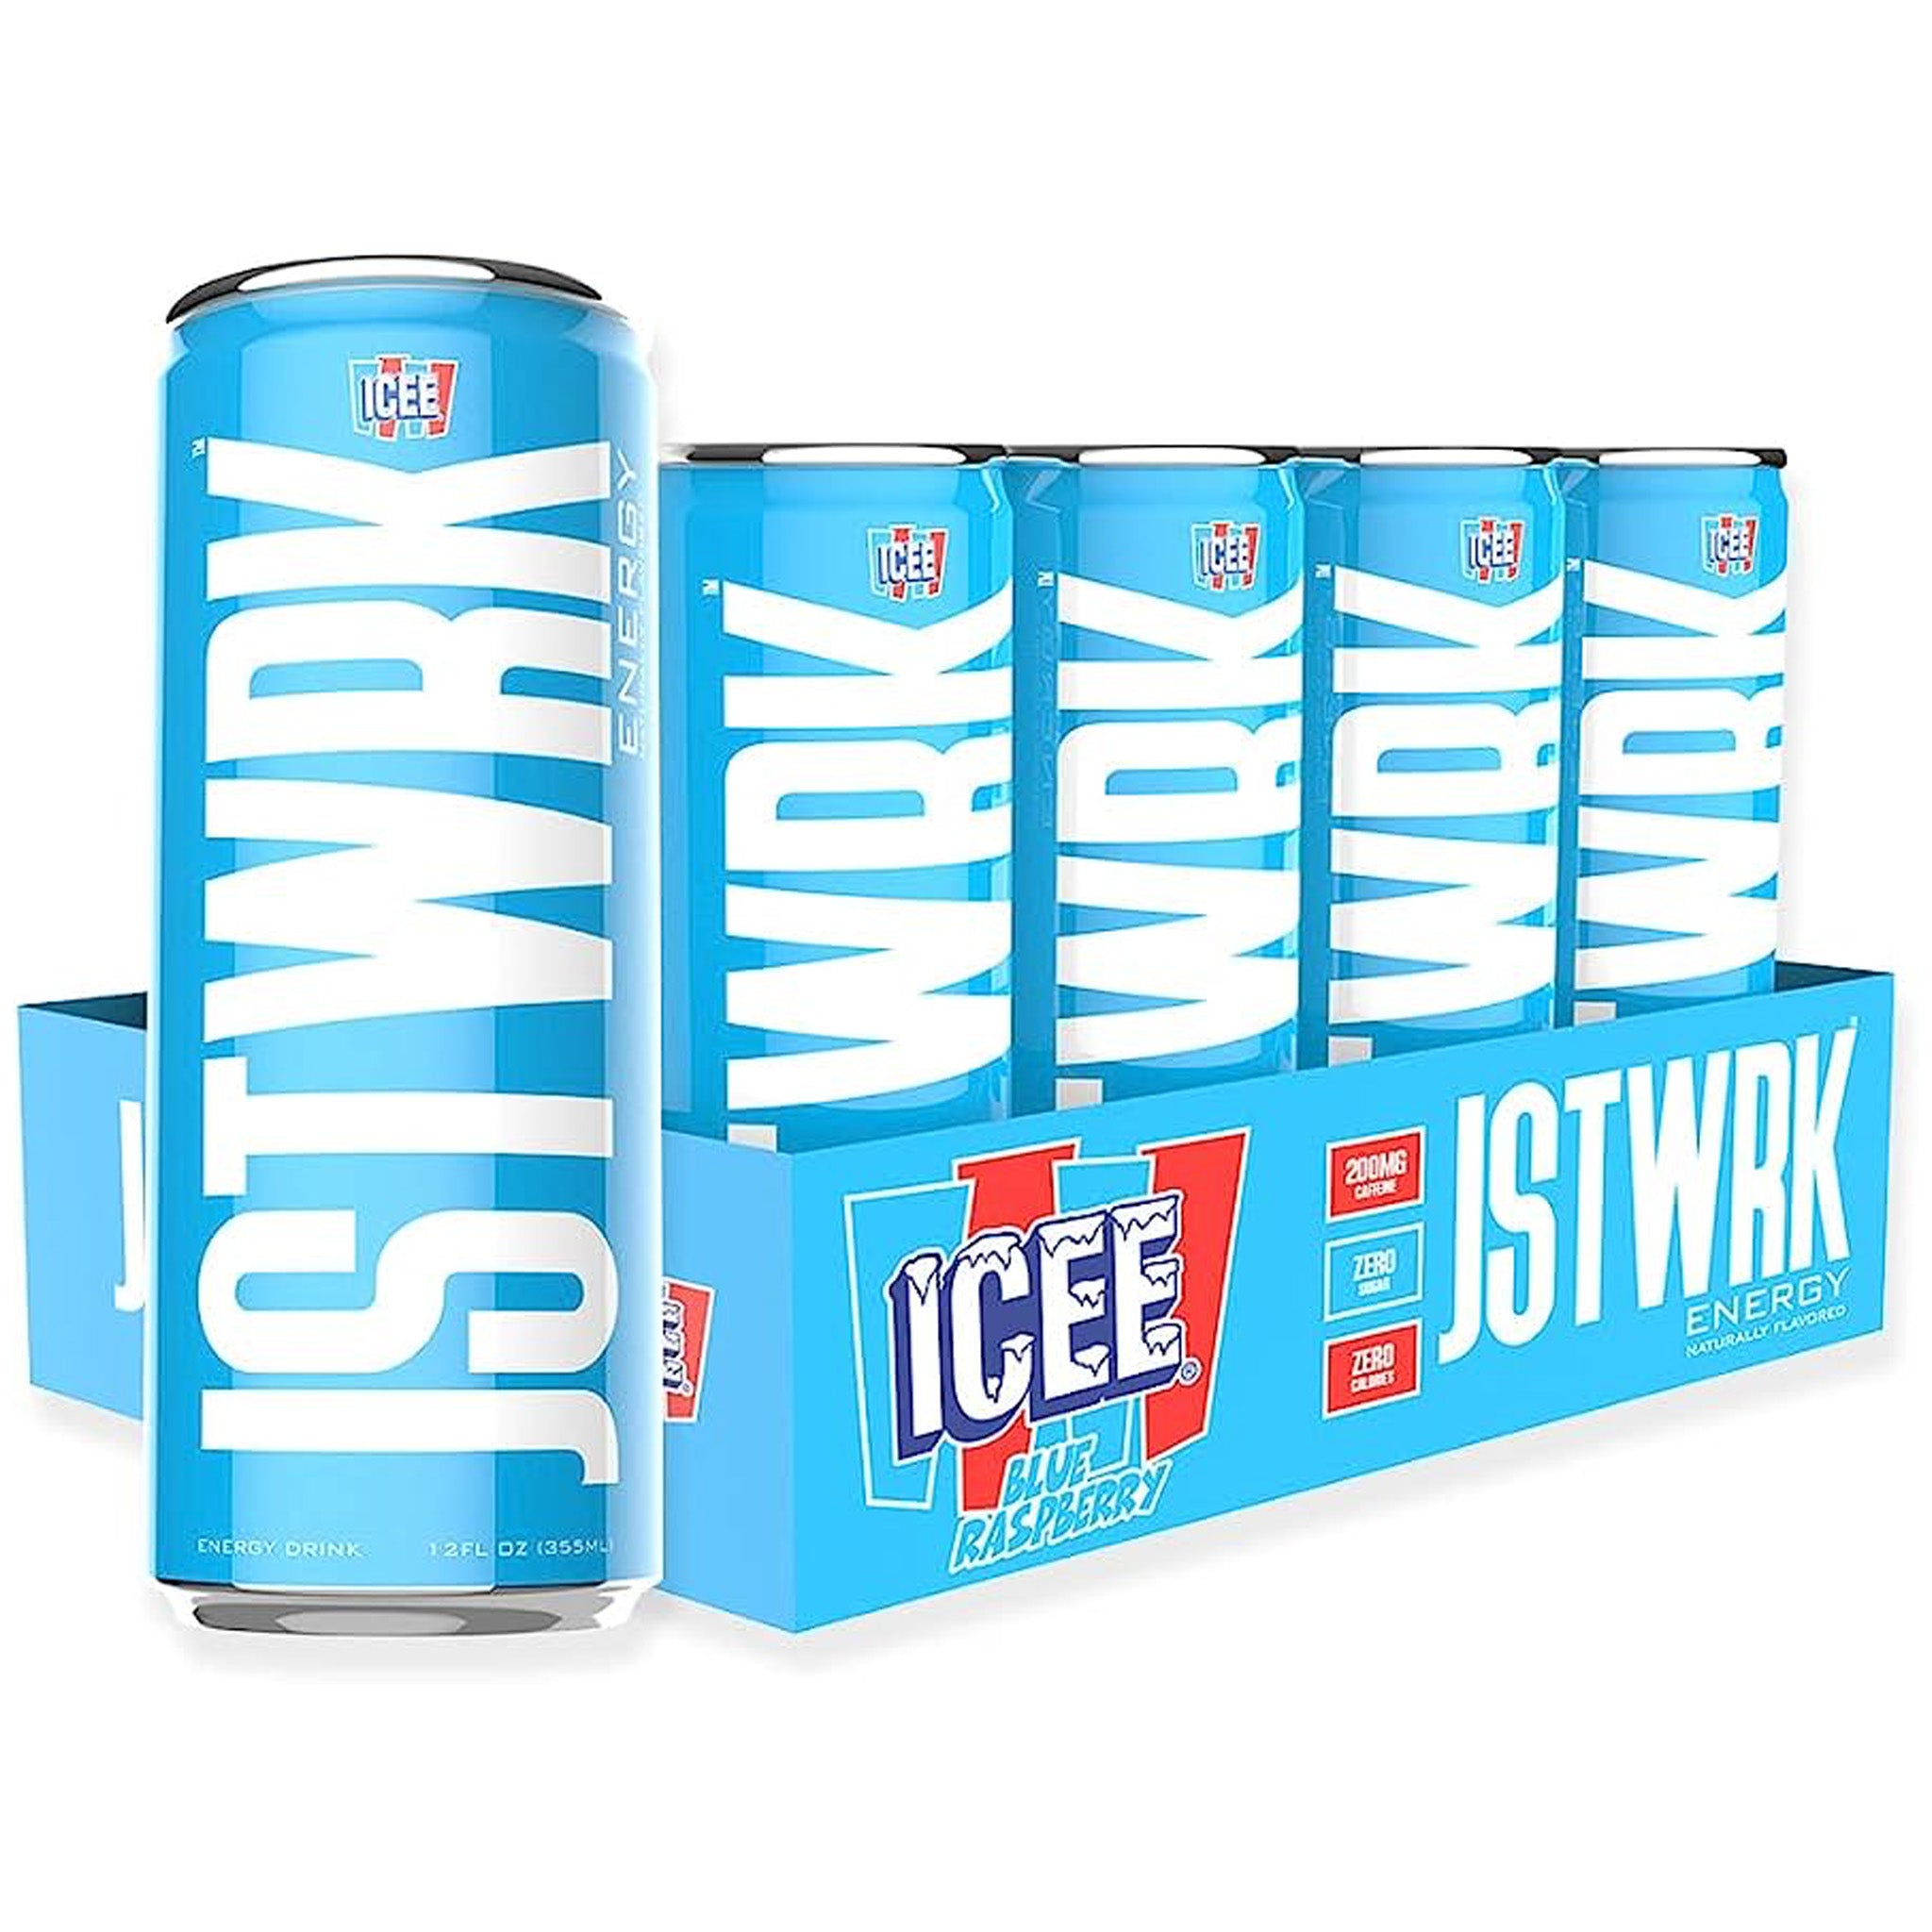 JST WRK Energy Drink (12 Cans)